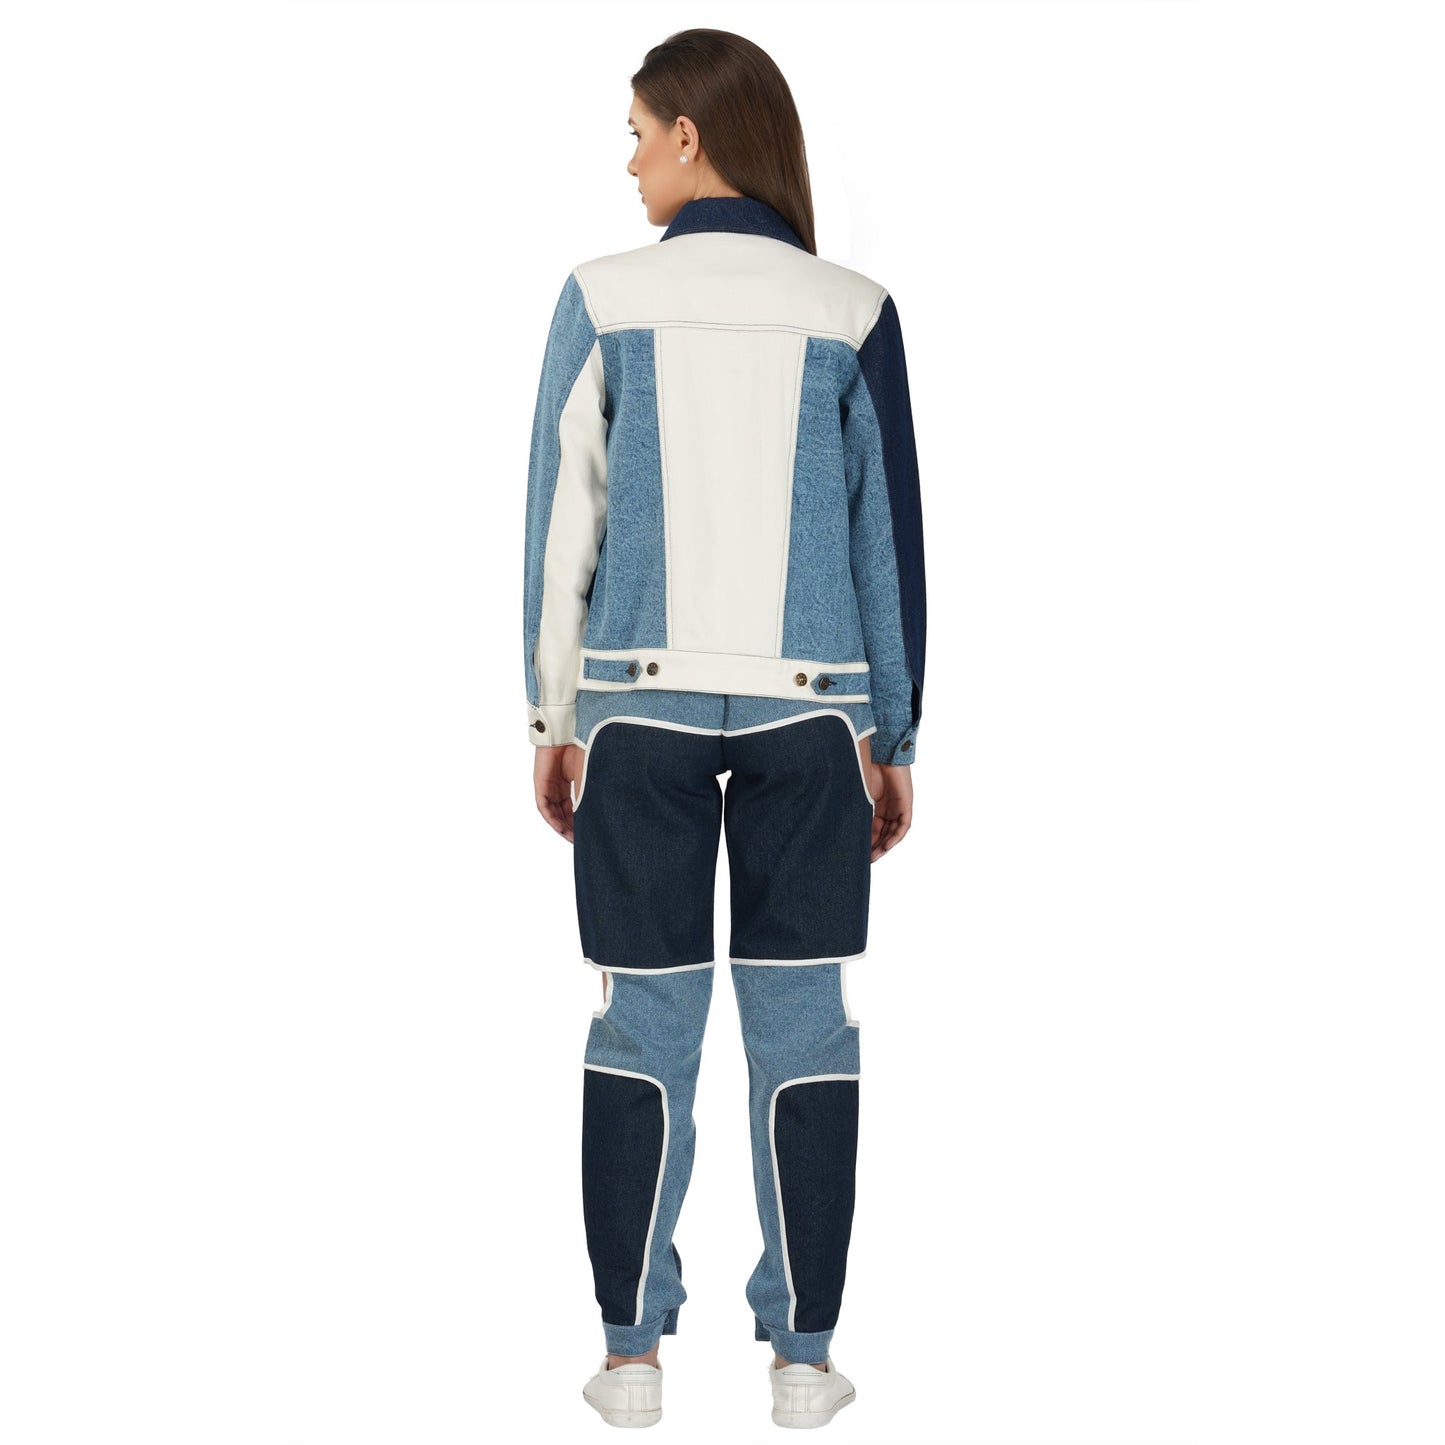 SLAY. Women's Side Cutout Blue & White Colorblock Denim Jeans